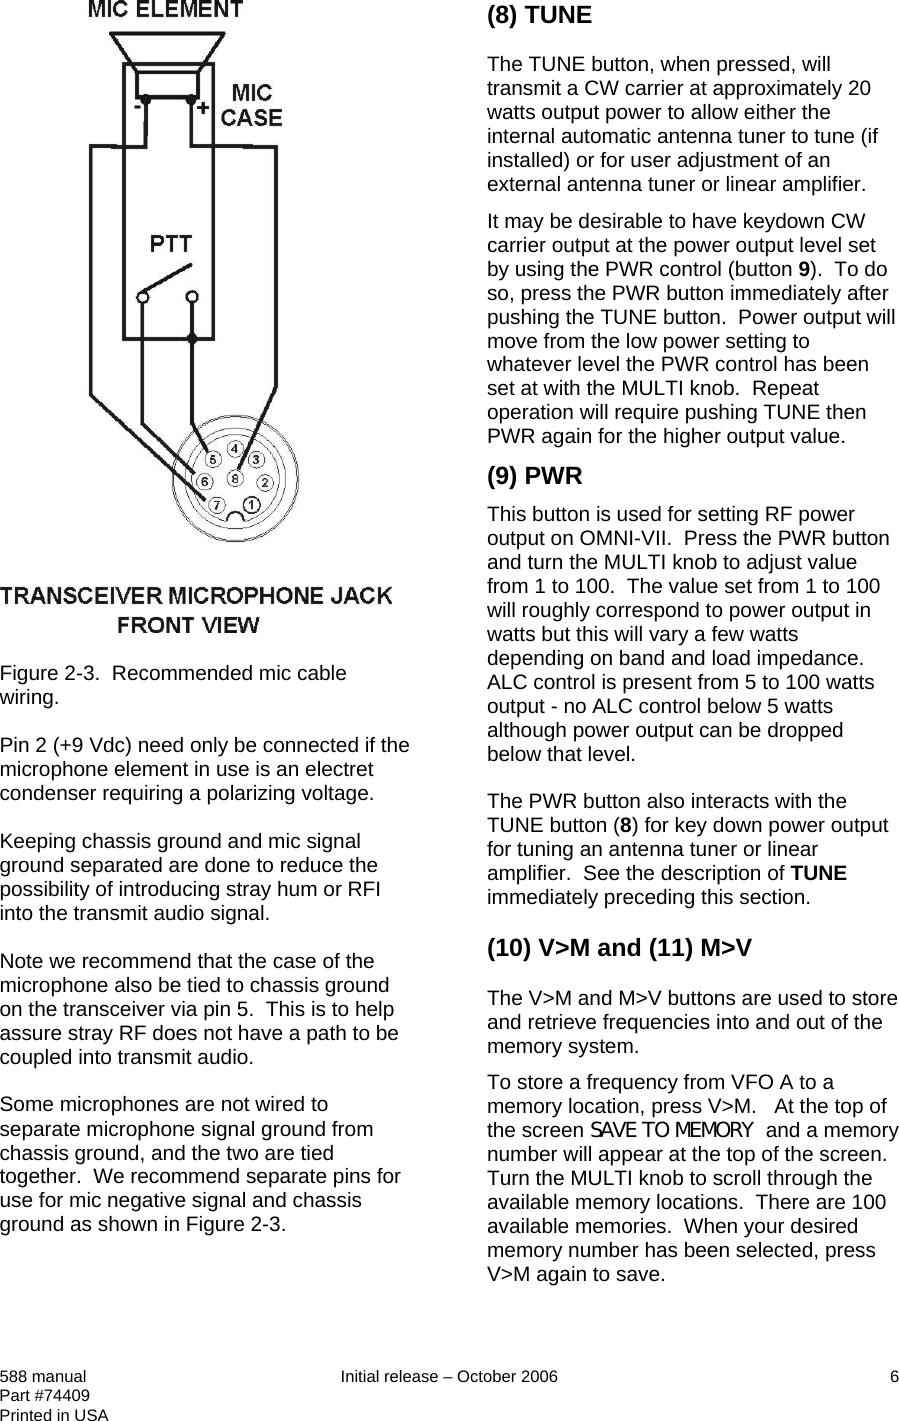 Ten Tec 588 HF AMATEUR RADIO TRANSCEIVER User Manual Chapter 1 YOUR NEW